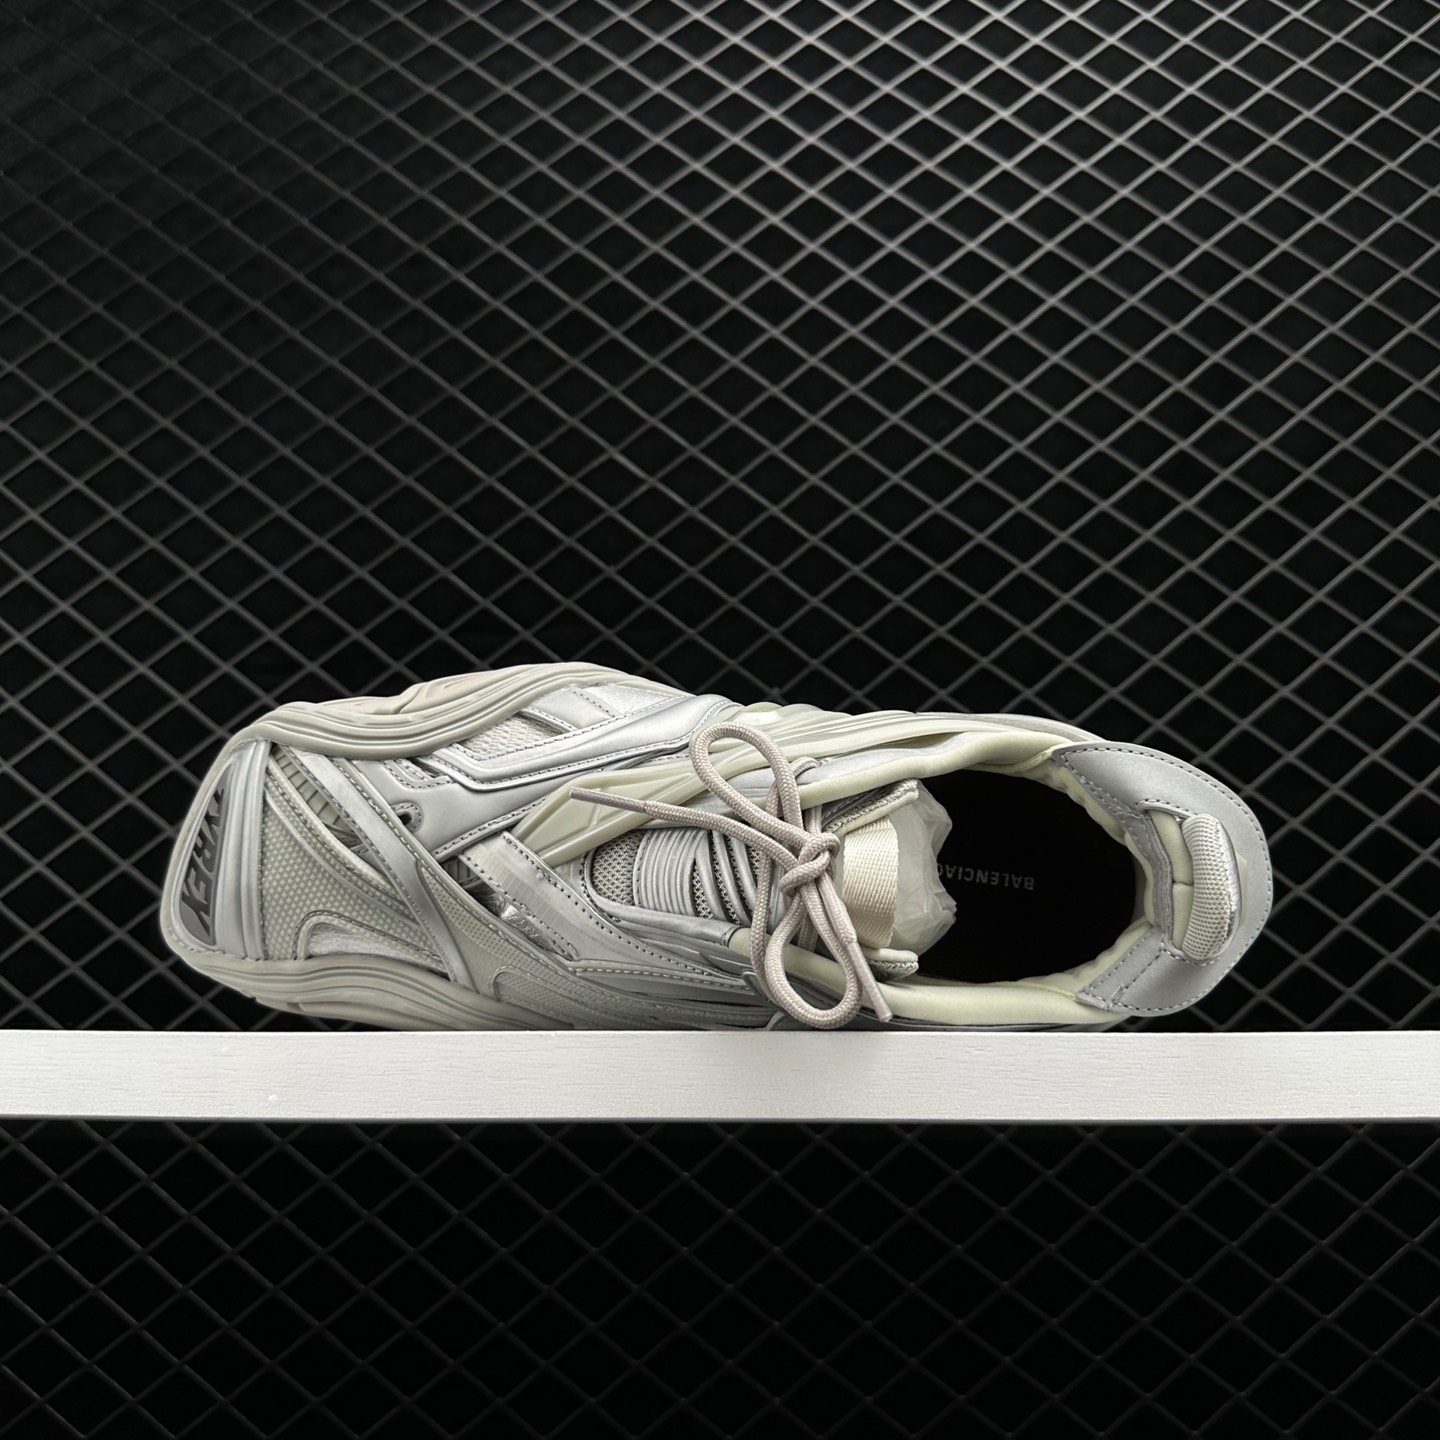 Balenciaga Wmns Tyrex Low 'Silver' Sneakers - Premium Quality Footwear